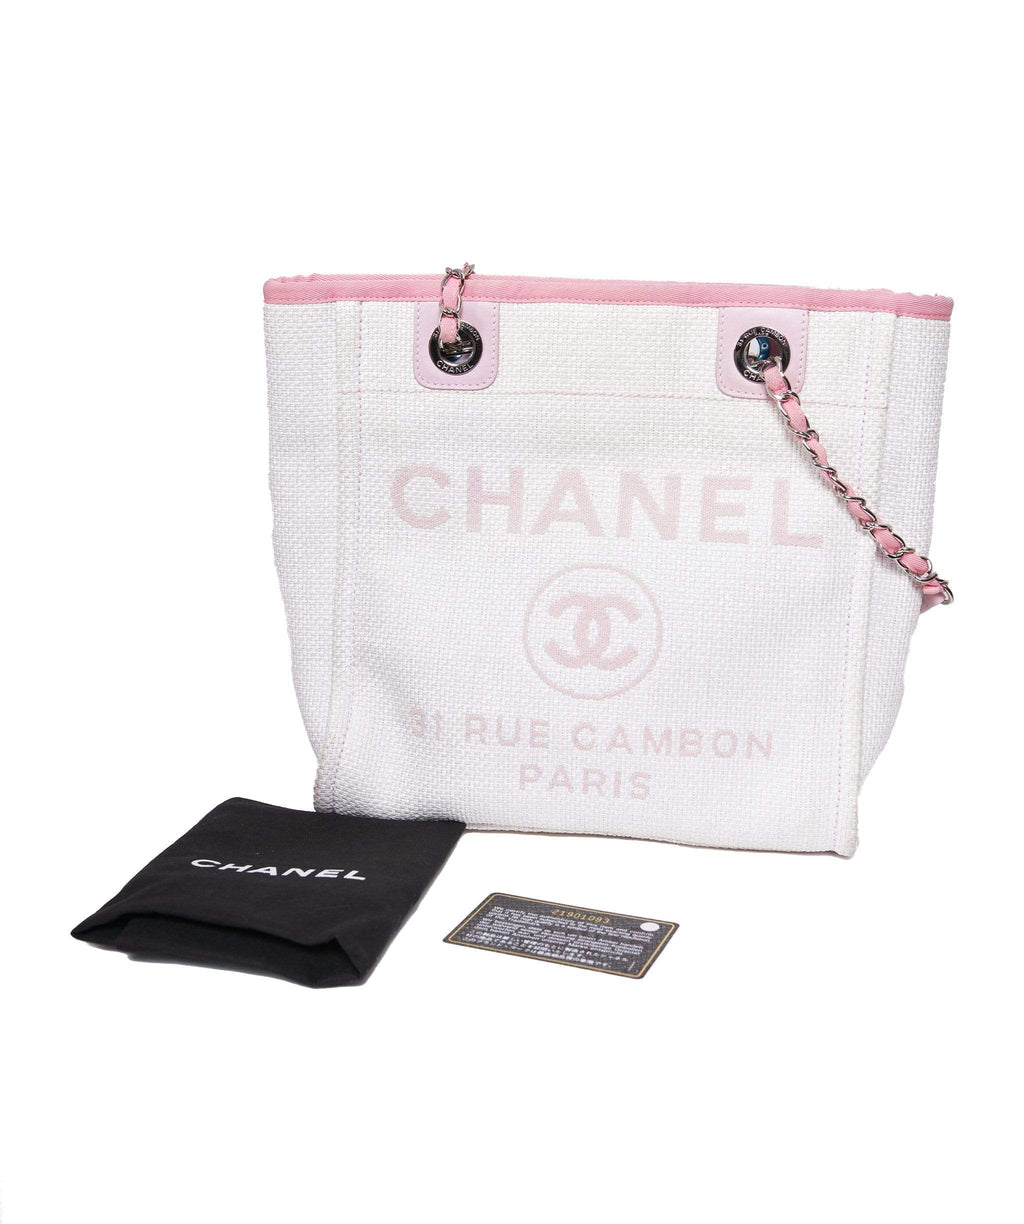 Chanel Small Deauville Shopping Bag - Pink Totes, Handbags - CHA919190